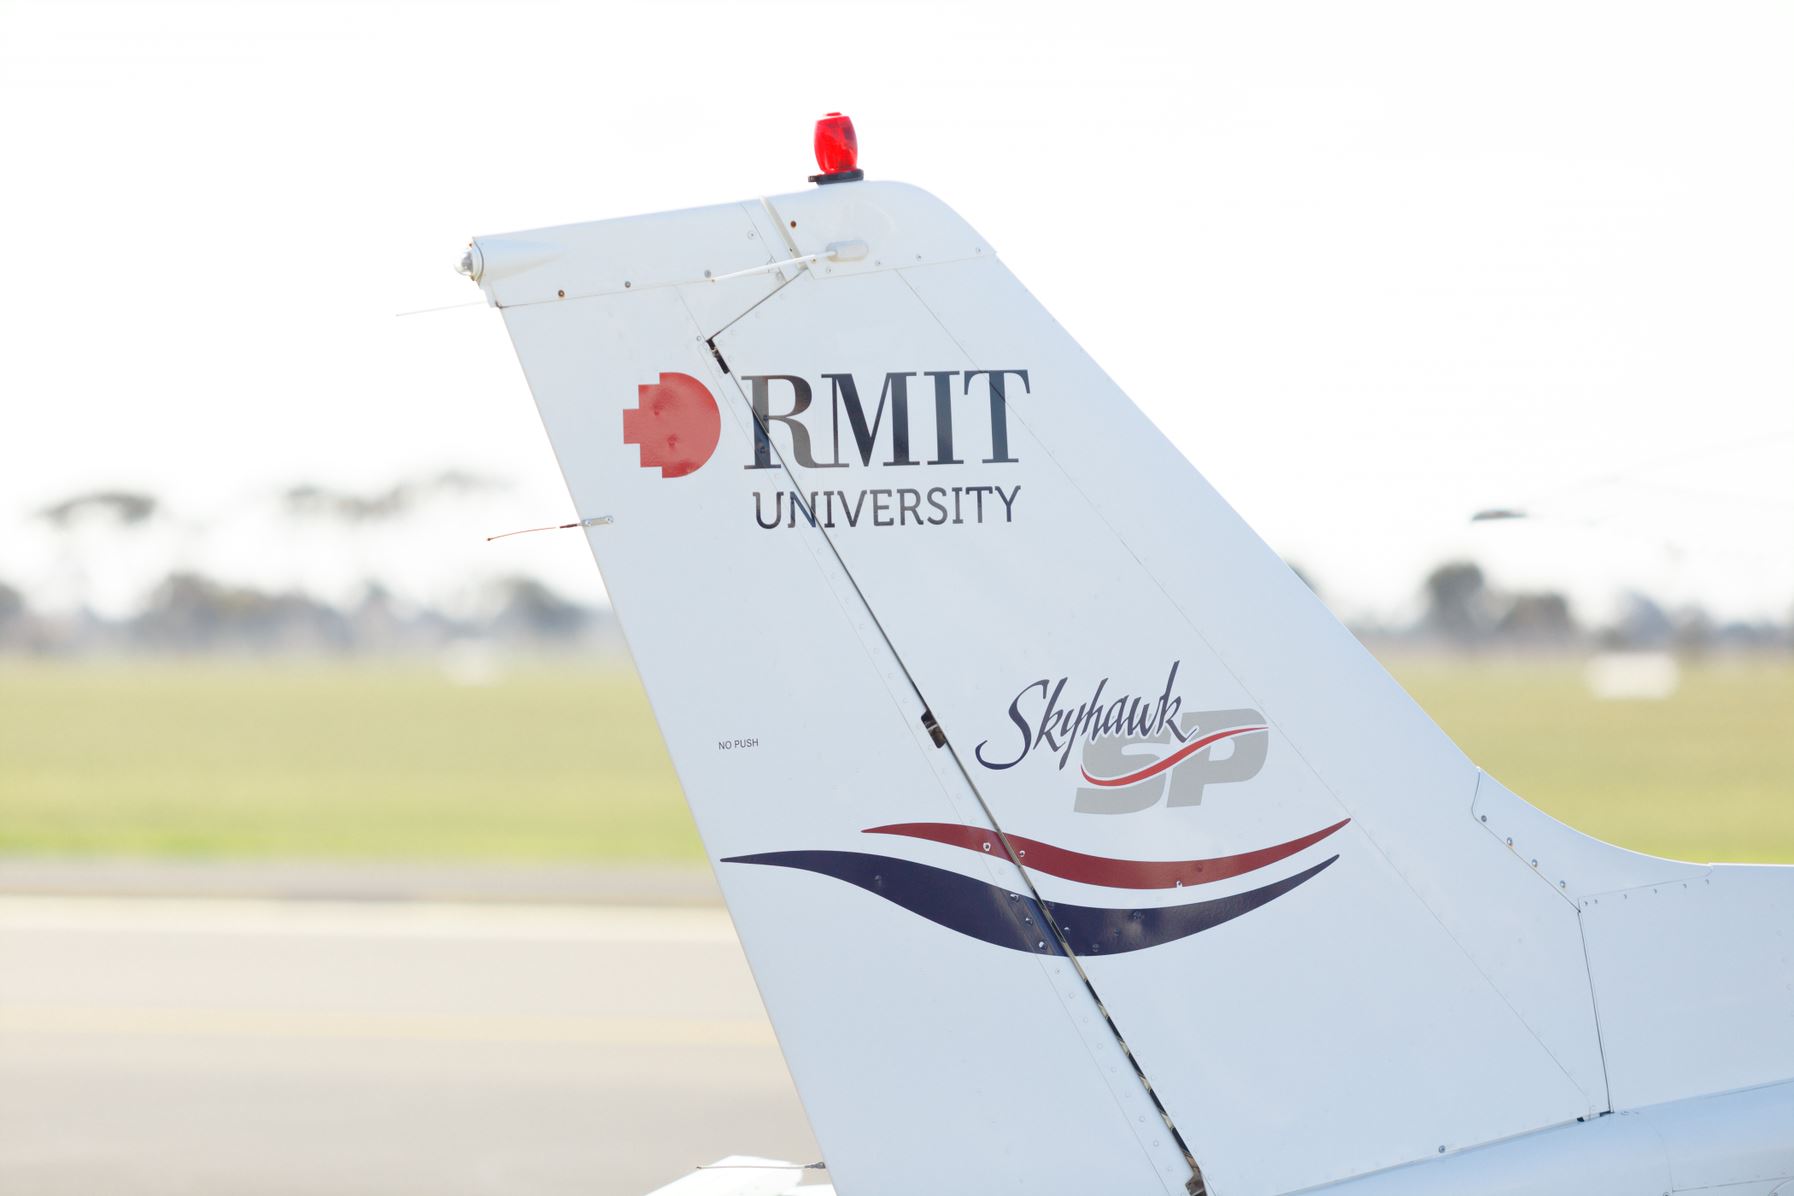 RMIT logo on the rear of an aeroplane